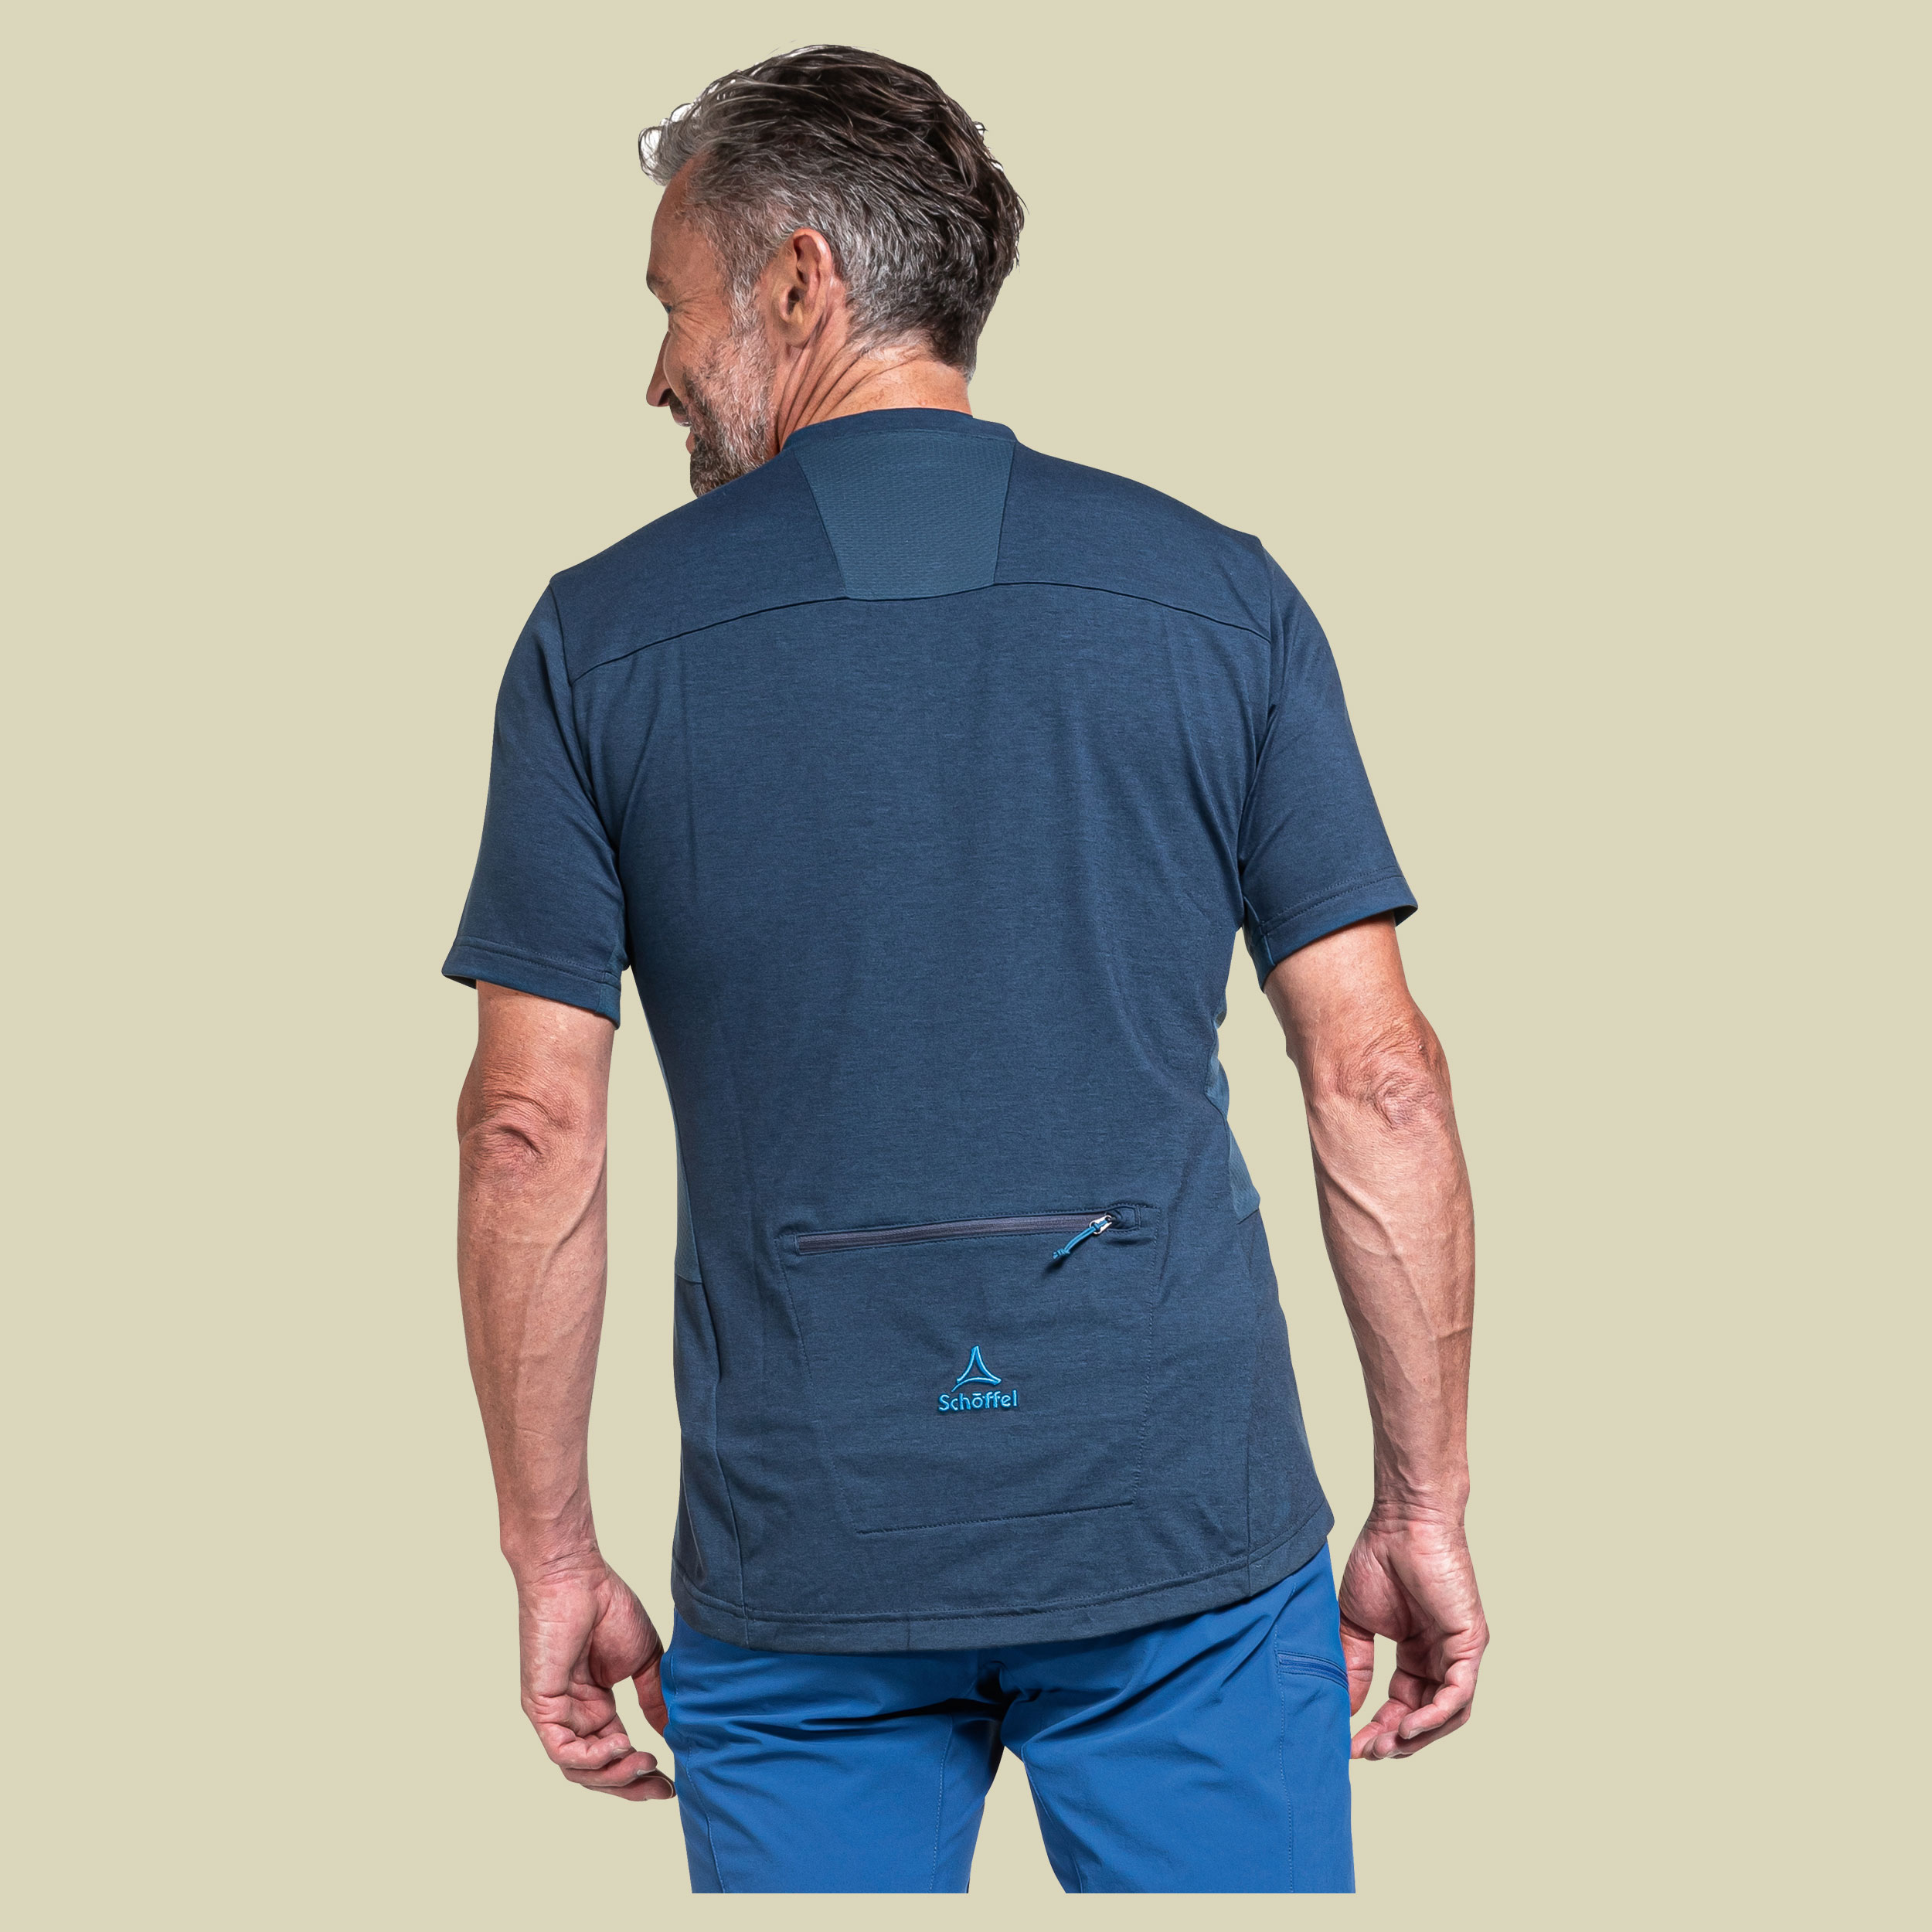 Alpe Adria Shirt Men Größe 52 Farbe moonlit ocean